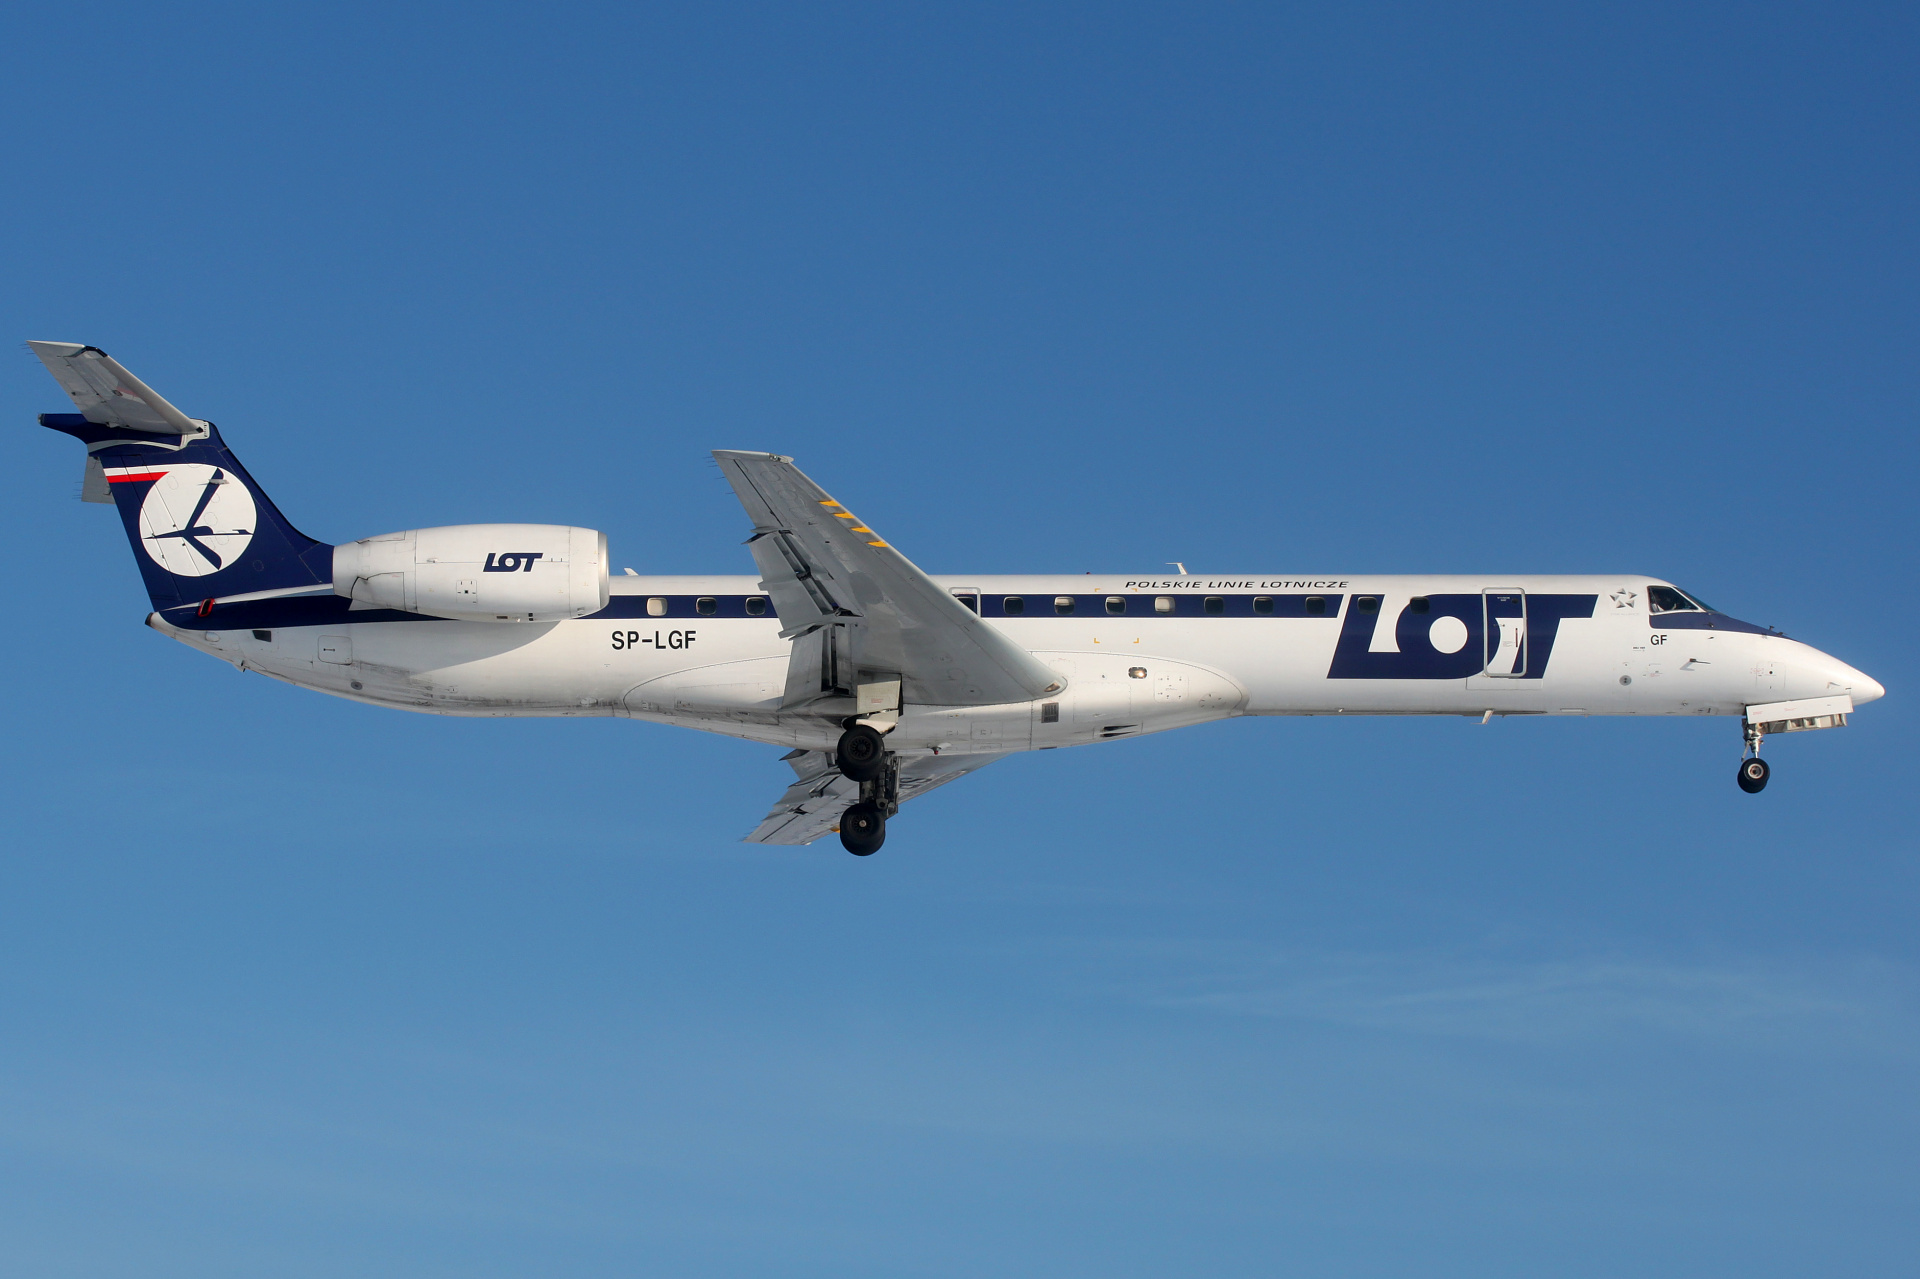 SP-LGF (Aircraft » EPWA Spotting » Embraer ERJ-145 » LOT Polish Airlines)